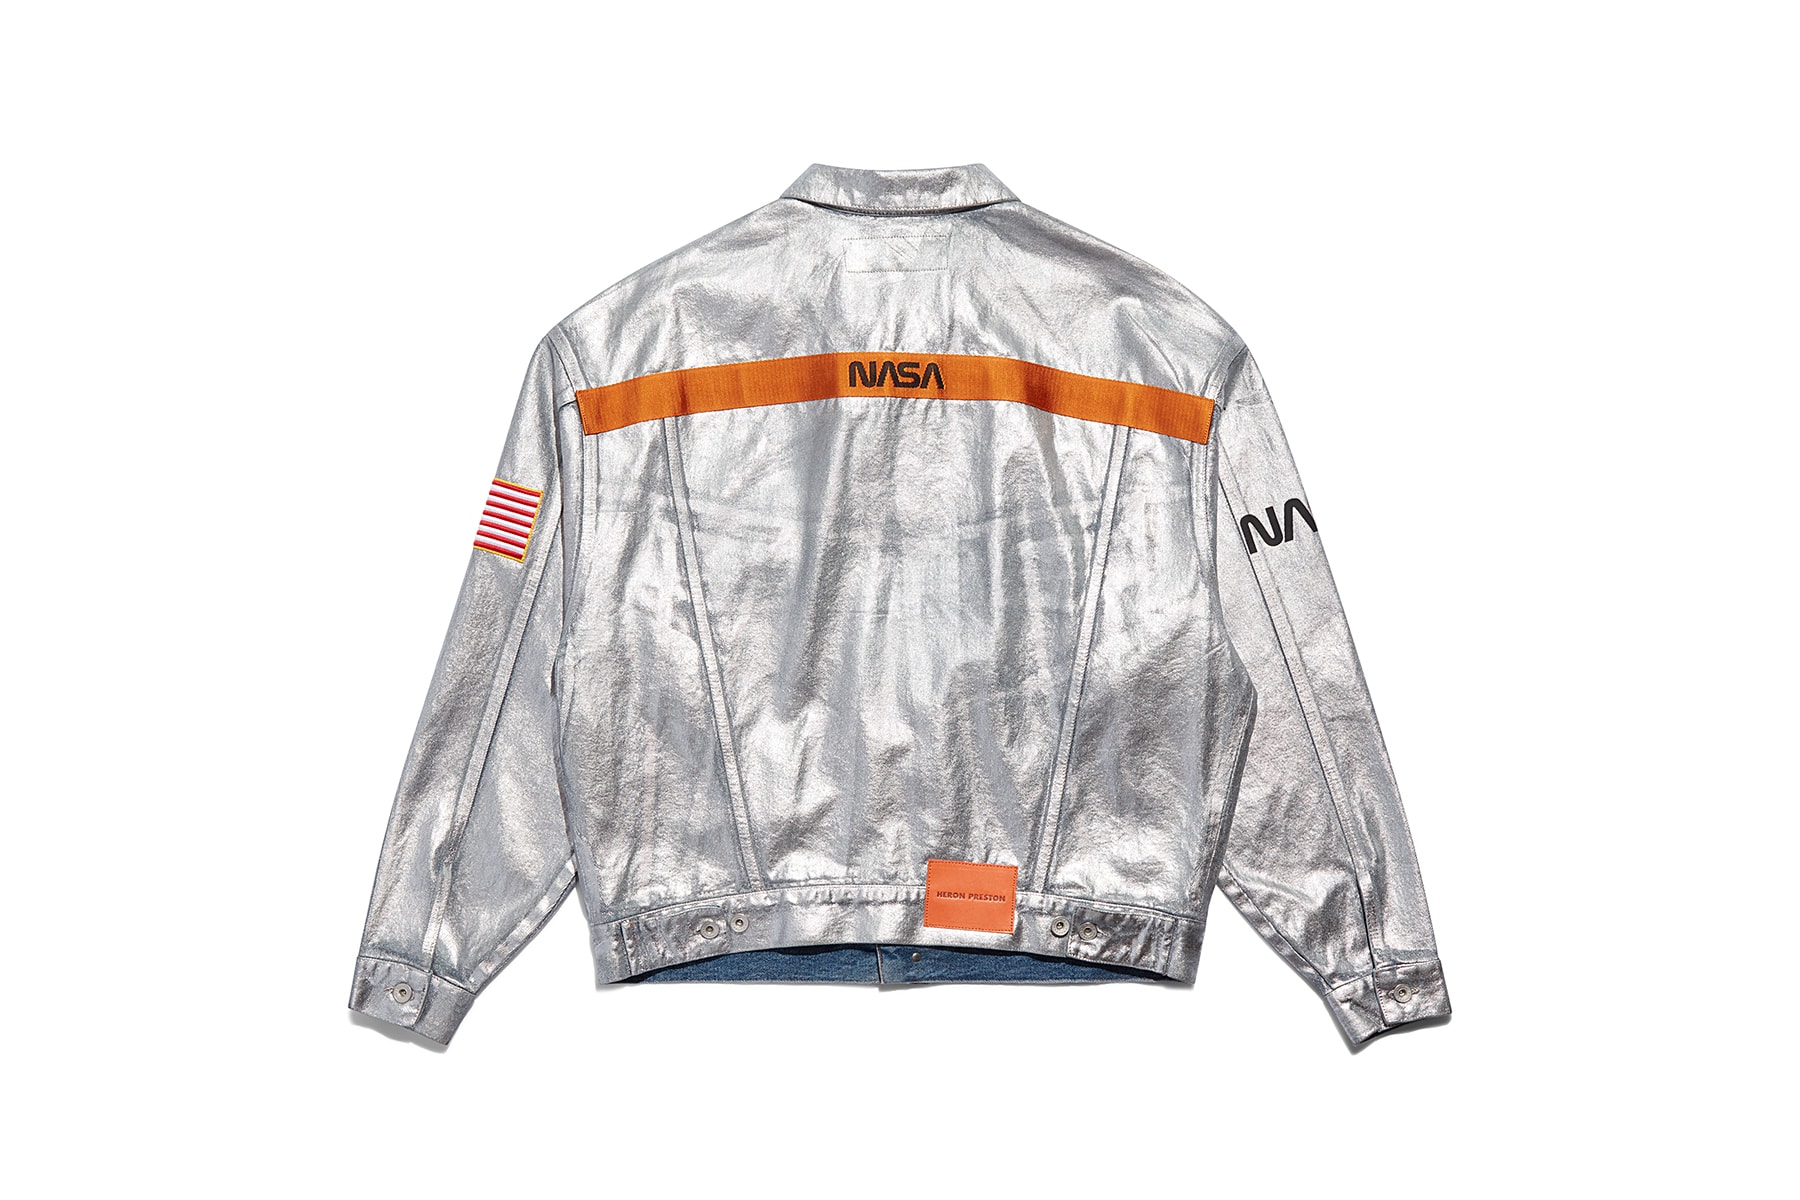 heron preston public figure fall winter 2018 collaboration nasa silver trucker jacket metallic orange branding